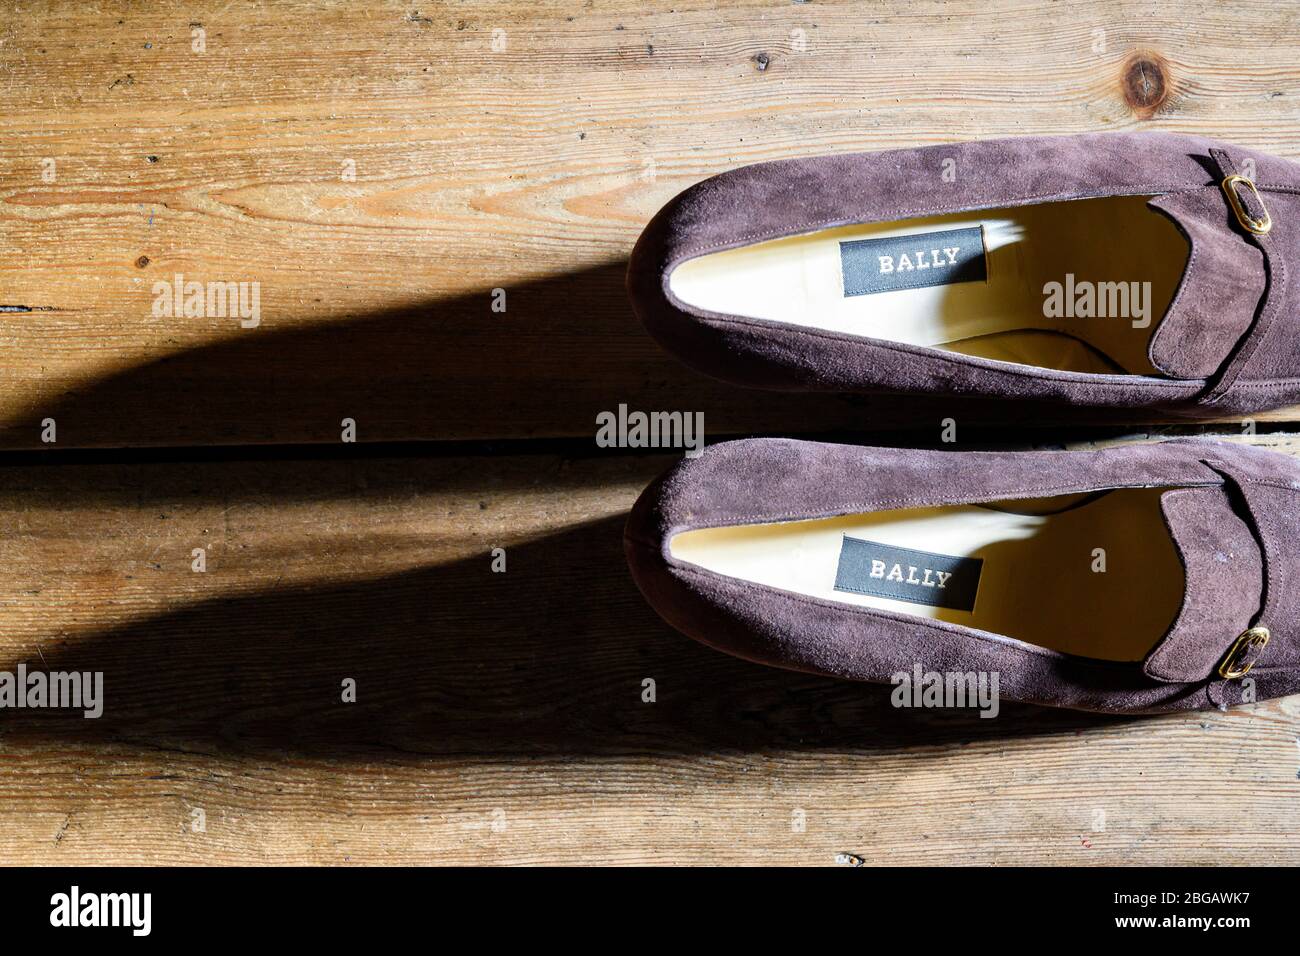 Bally ladies shoes Stock Photo - Alamy